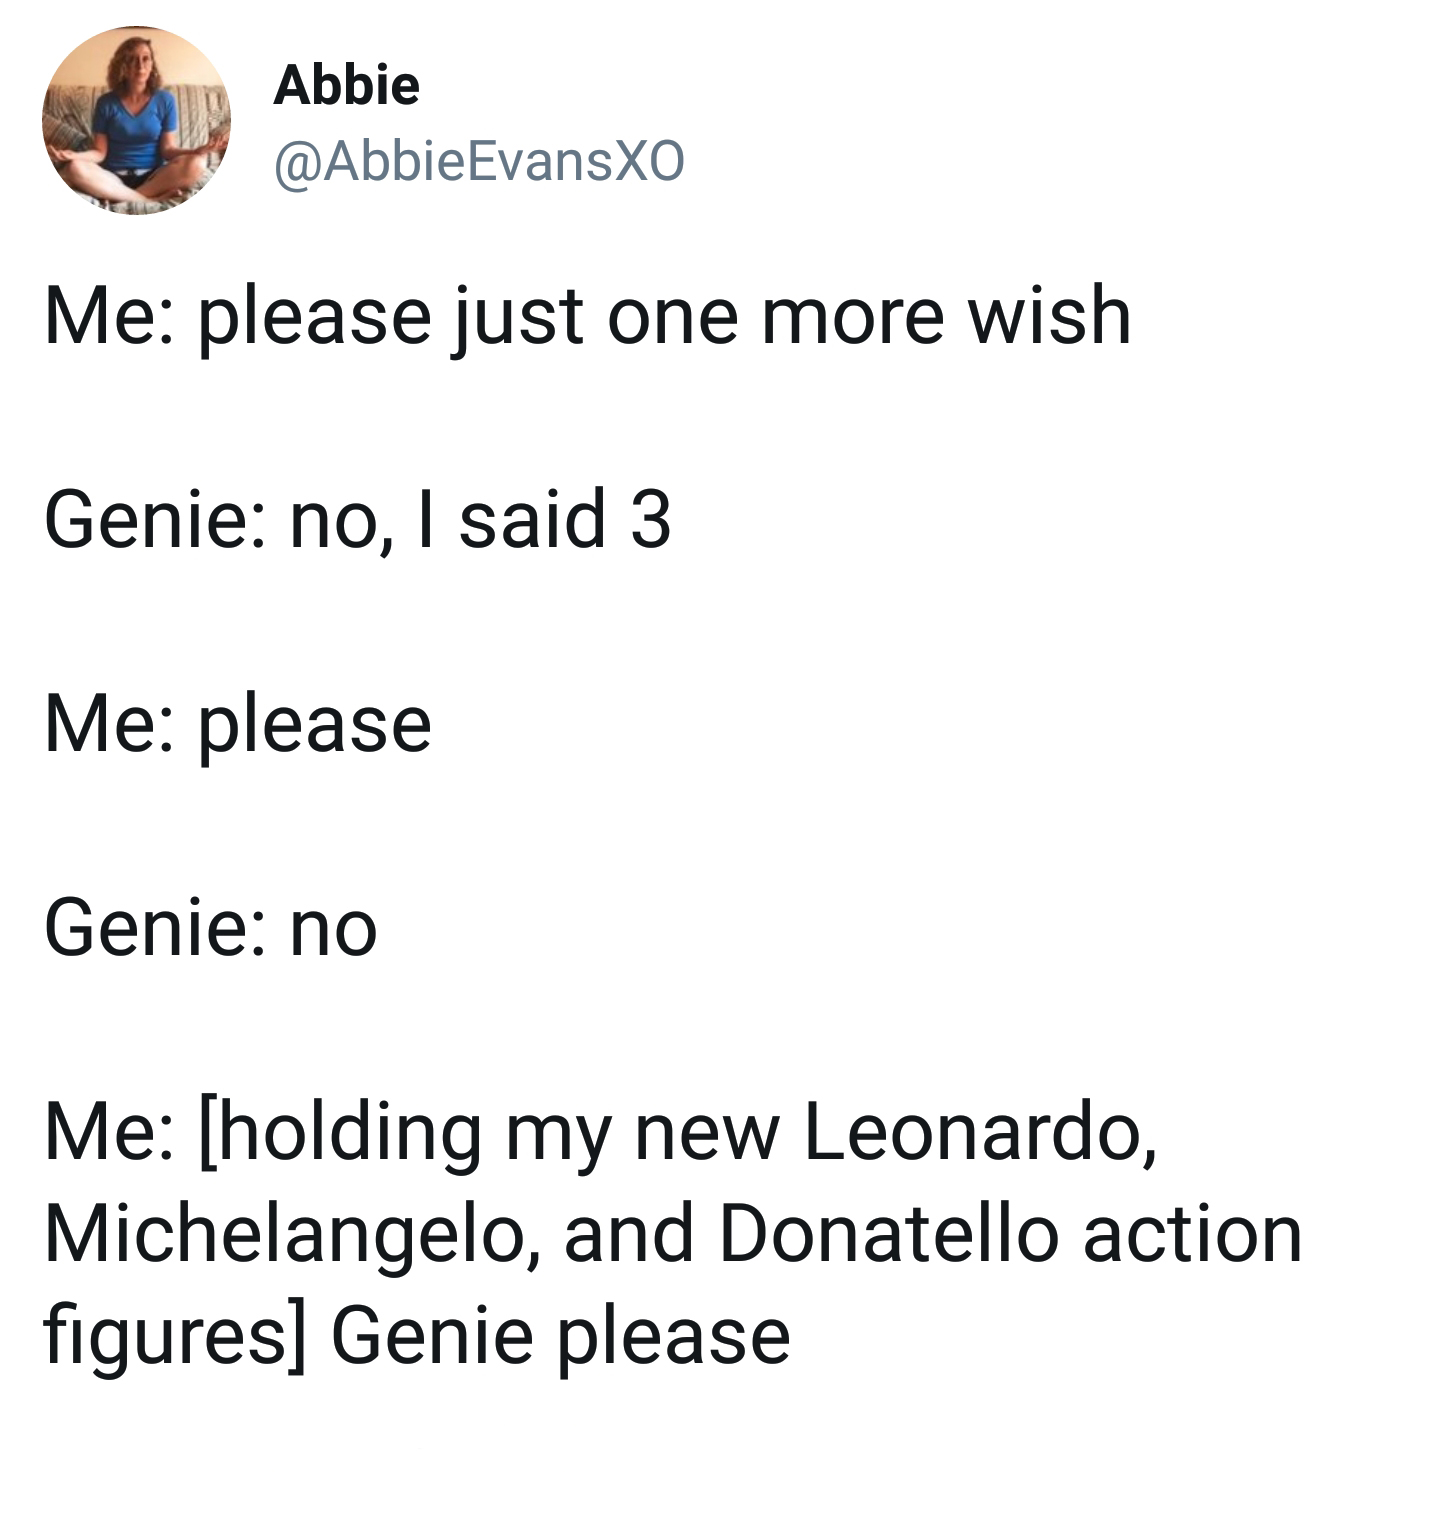 memes - Bit - Abbie Me please just one more wish Genie no, I said 3 Me please Genie no Me holding my new Leonardo, Michelangelo, and Donatello action figures Genie please